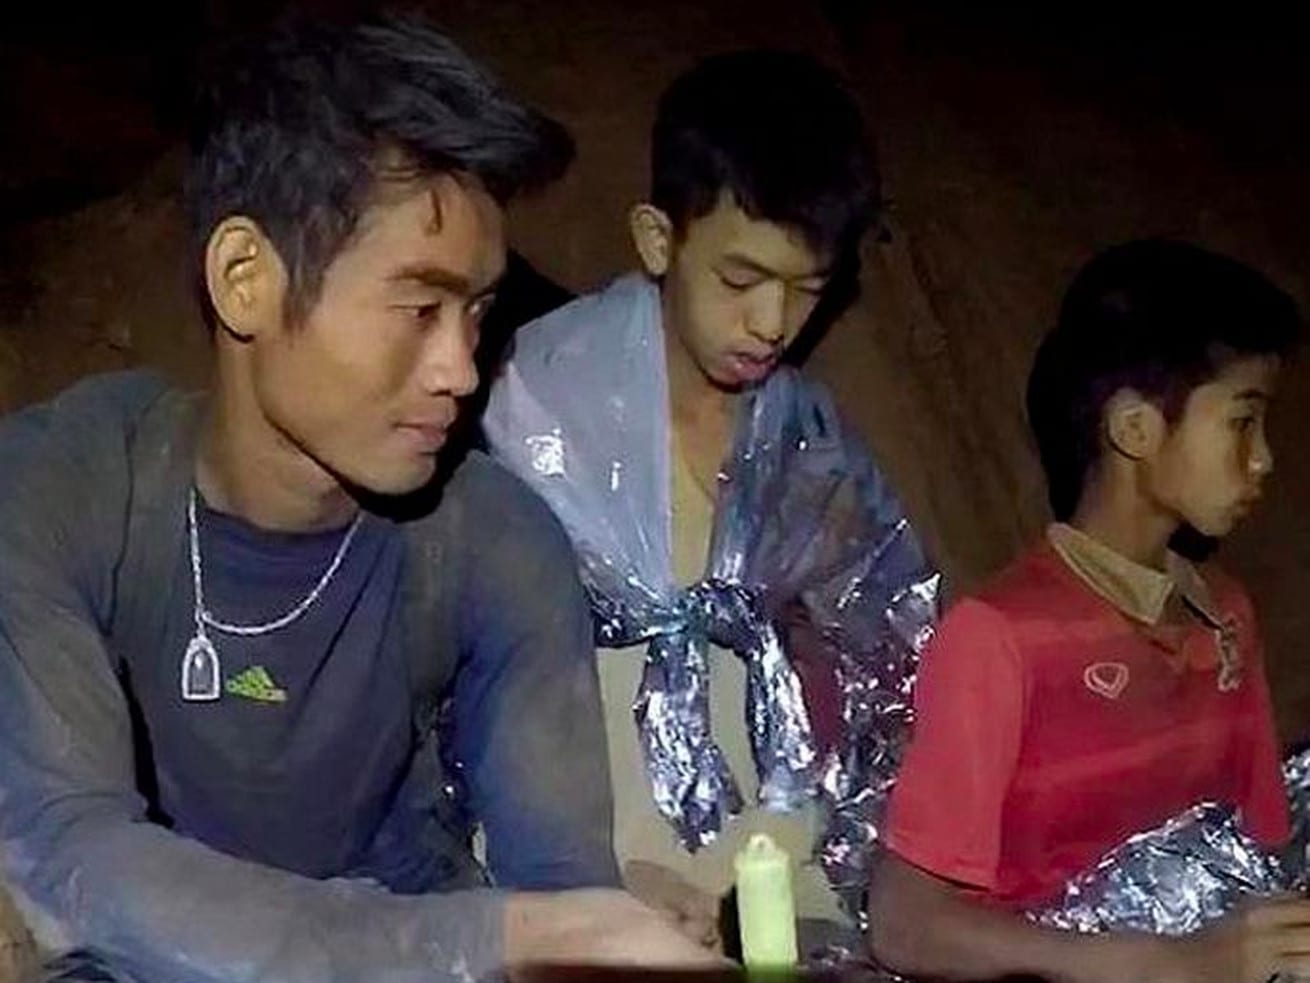 How Buddhist meditation kept the Thai boys calm in the cave